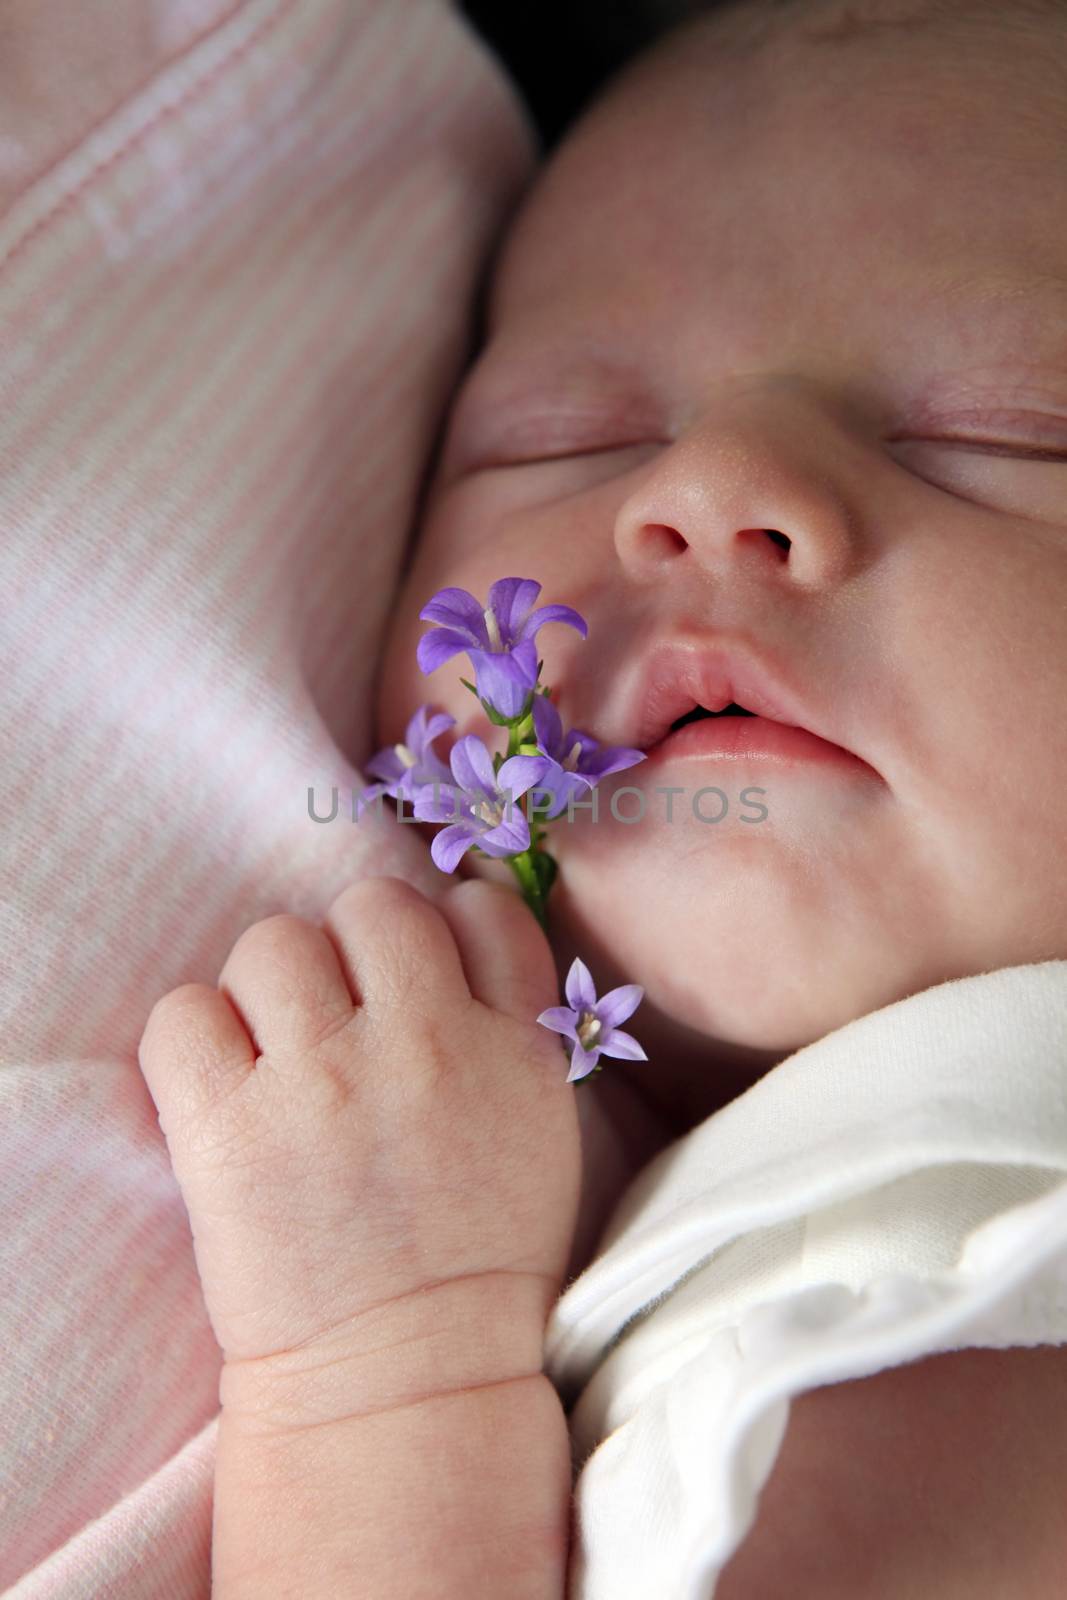 Sleeping newborn baby. The first days of life of the newborn girl